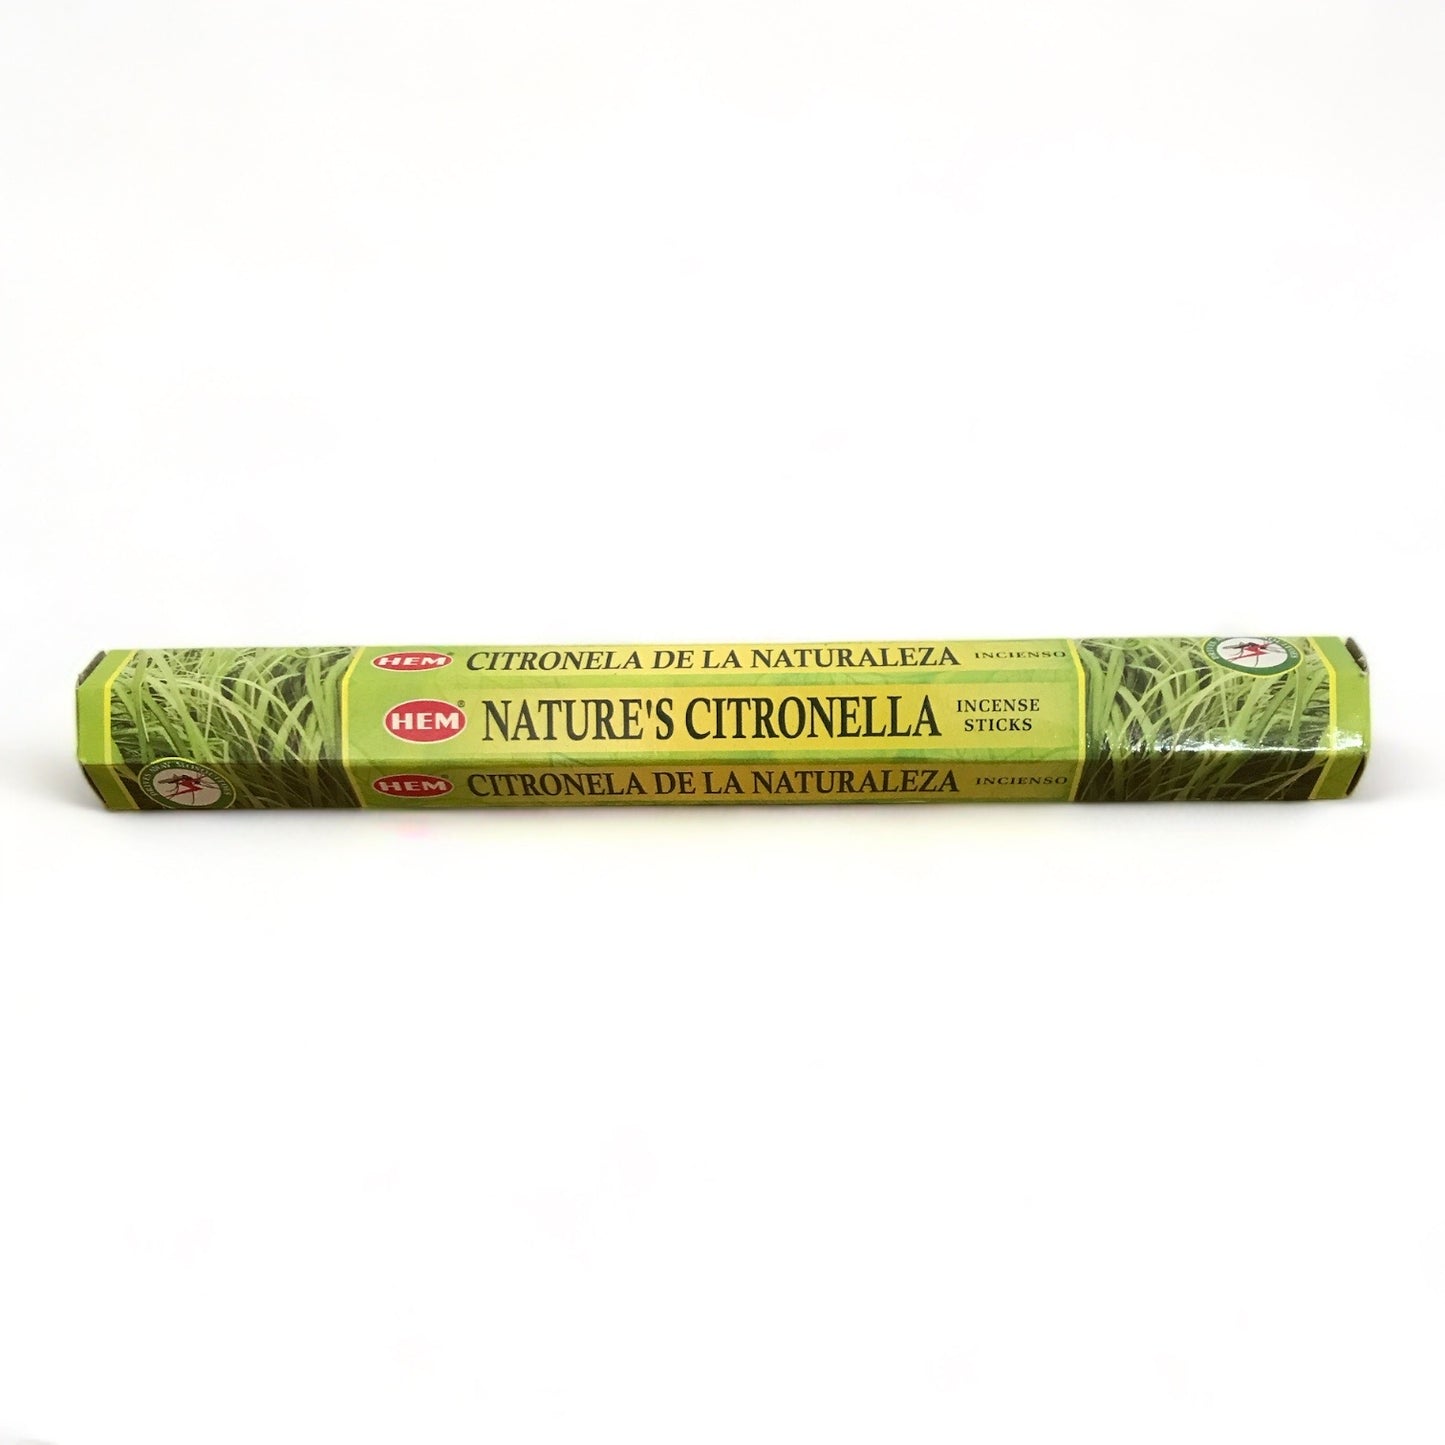 Natures Citronella Incense Sticks - Hem - 15g